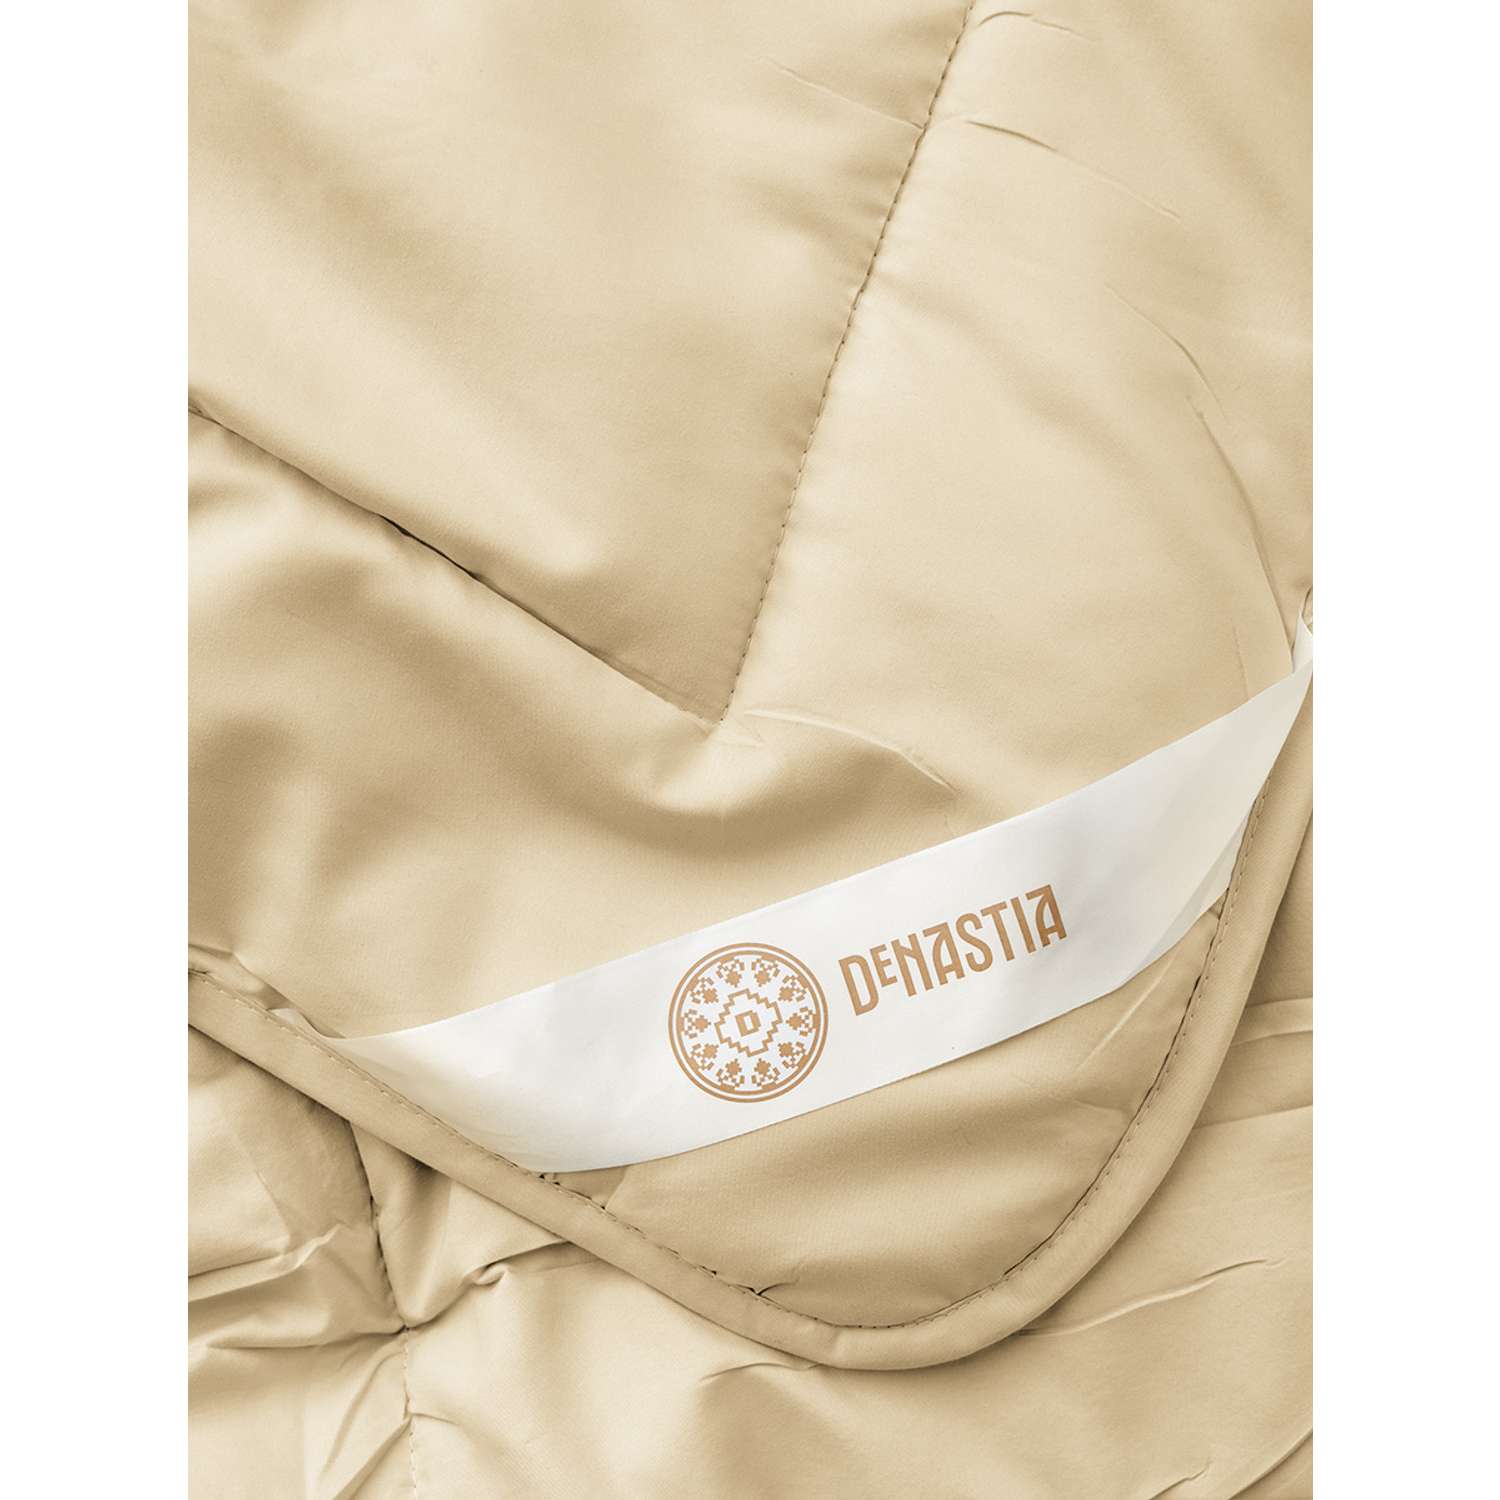 Одеяло/покрывало DeNASTIA 200x220 см желтый R020020 - фото 4